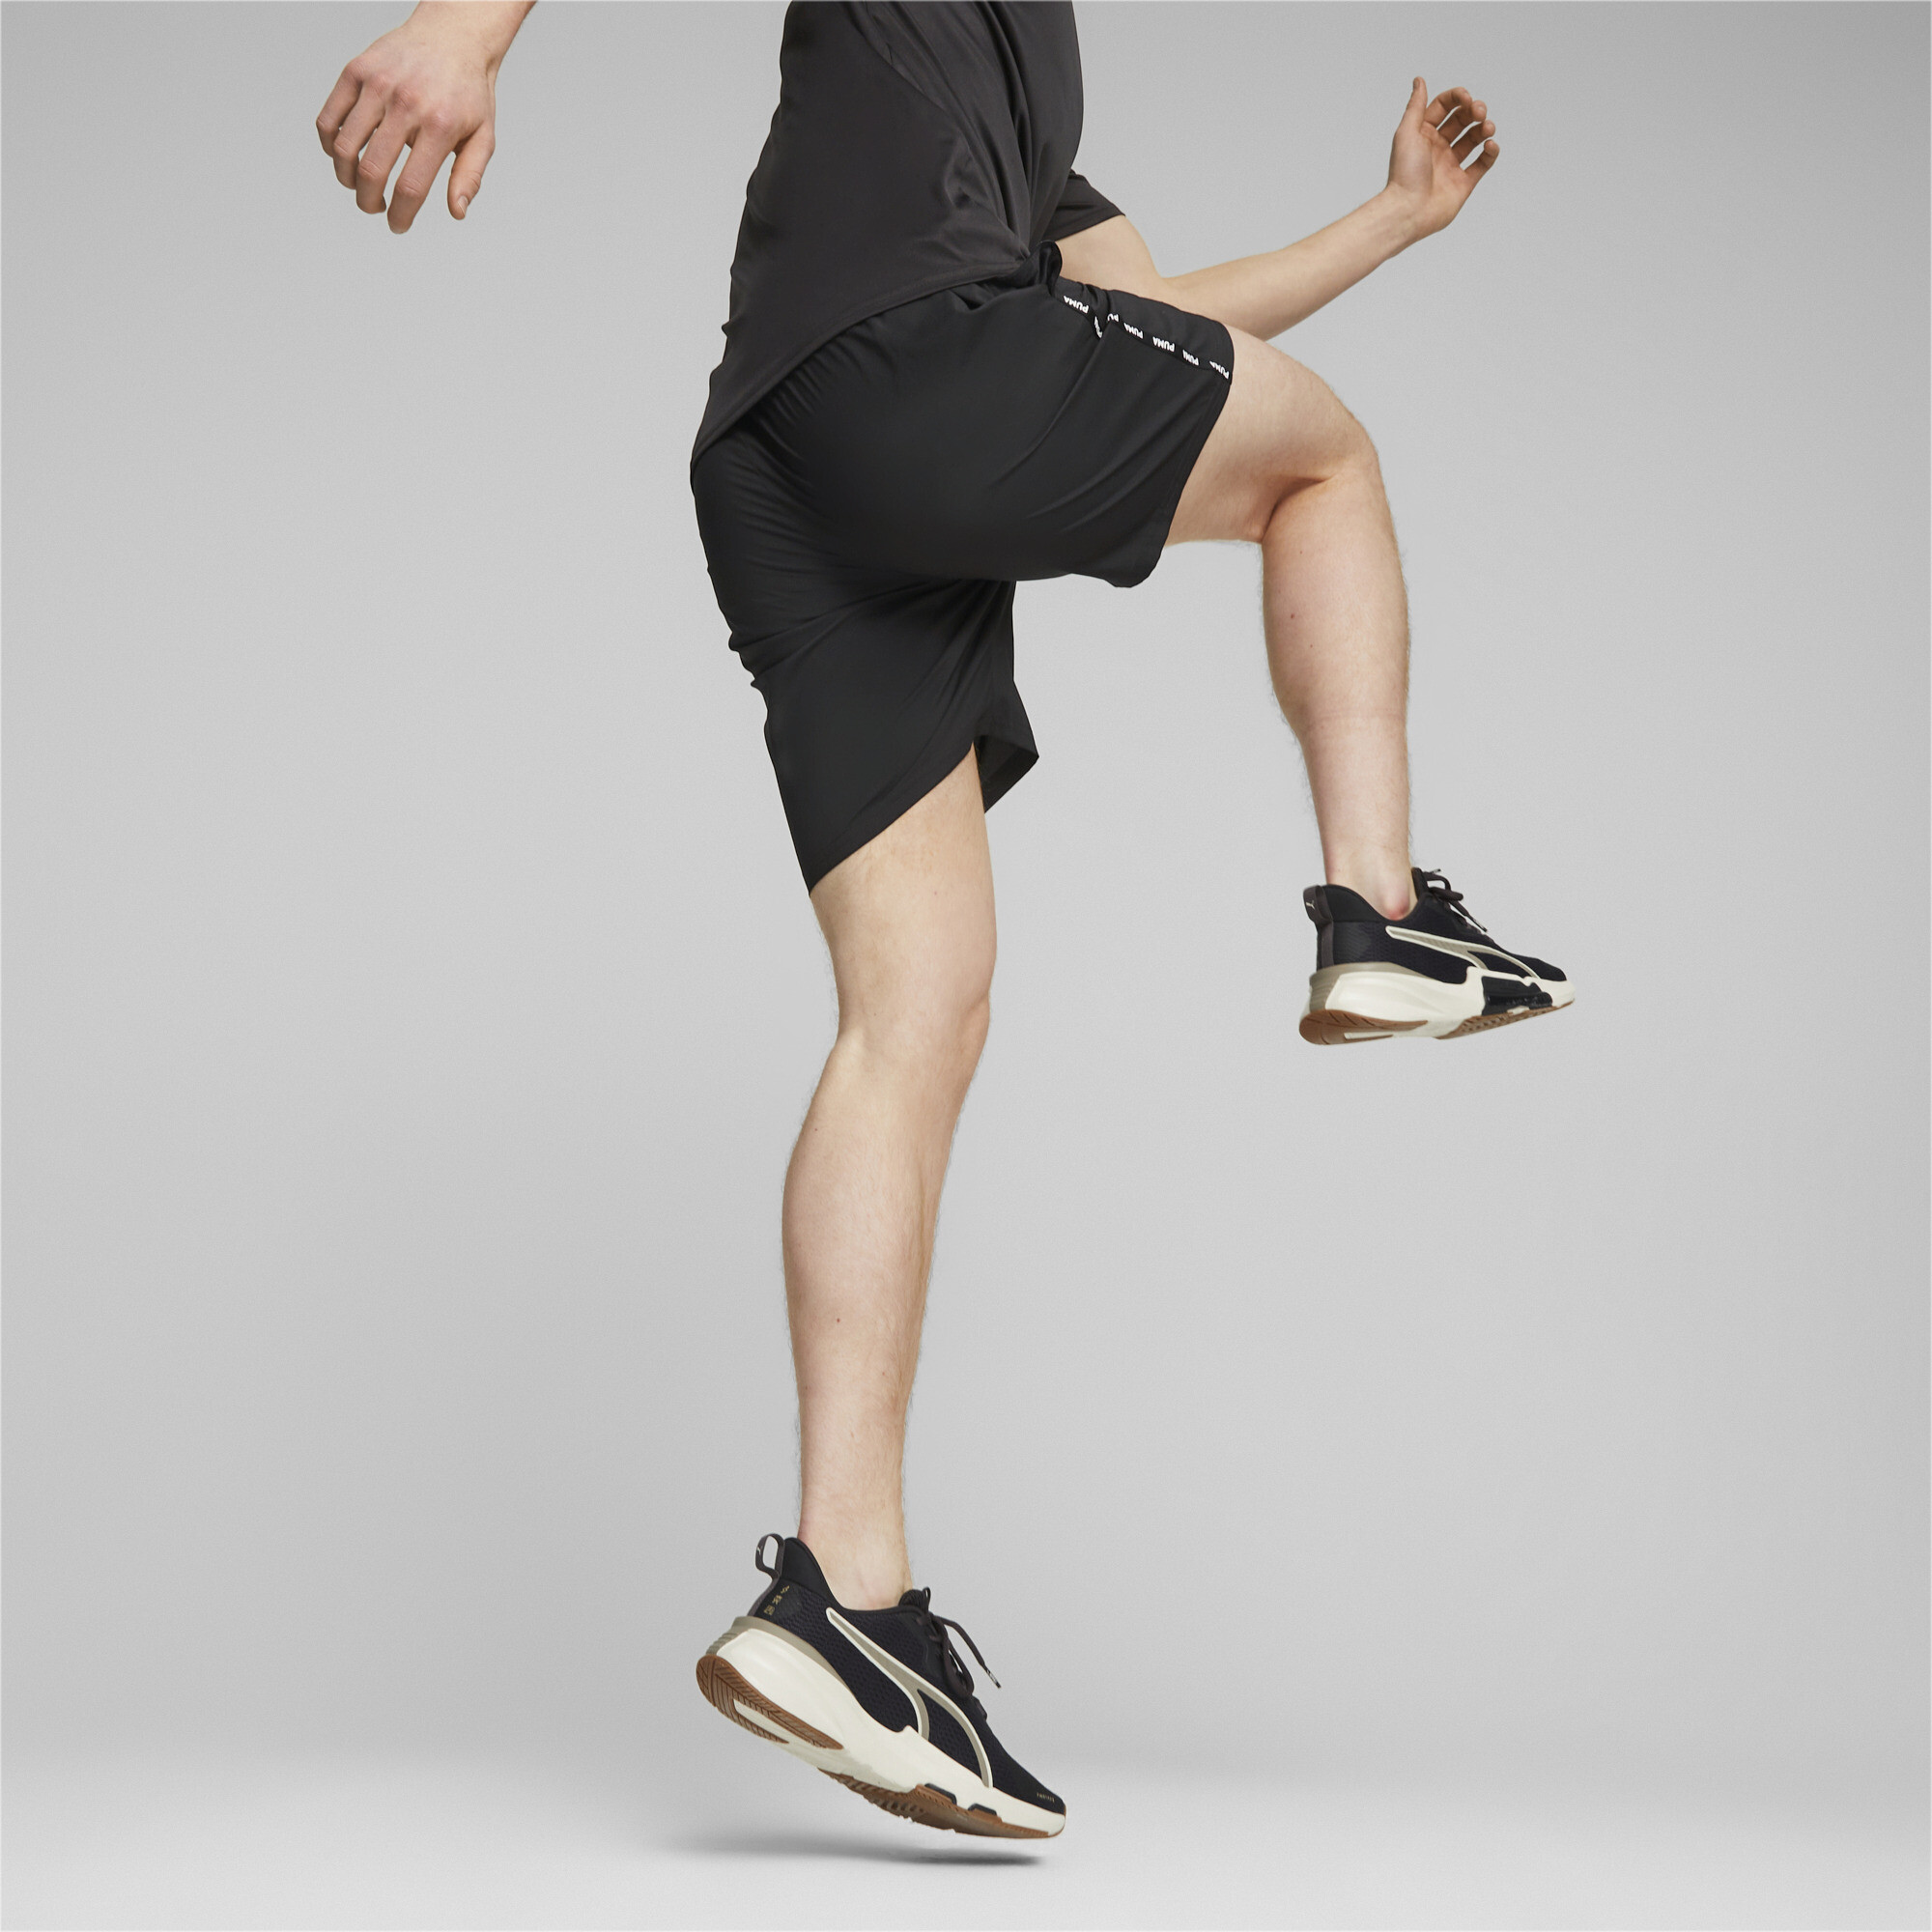 Men's PUMA Fit 7 Training Shorts In Black, Size Medium